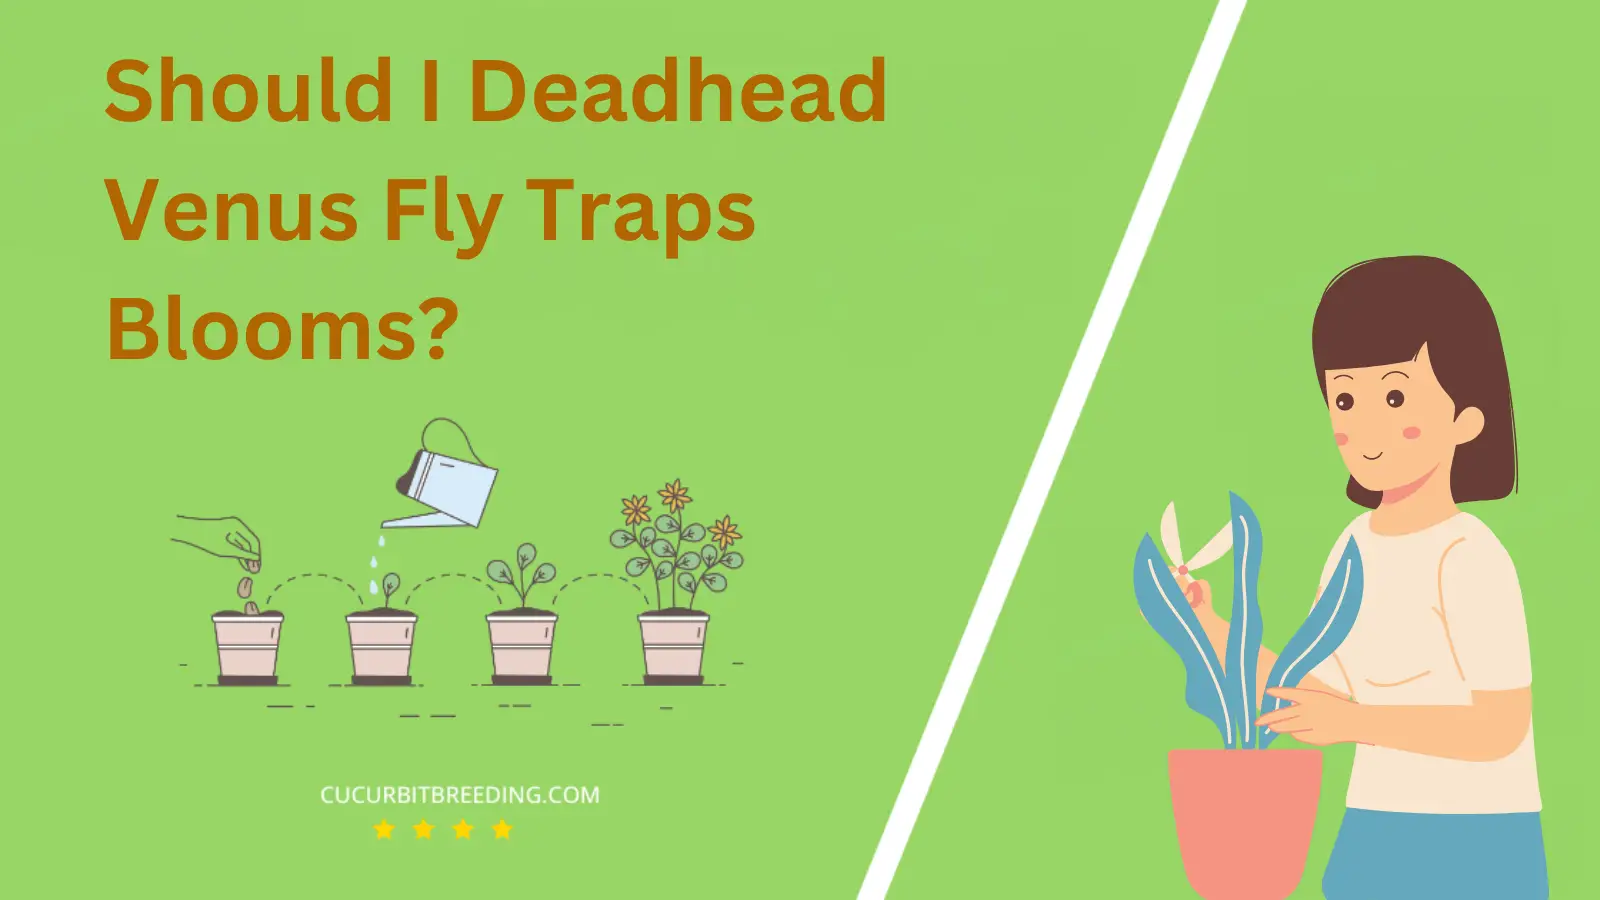 Should I Deadhead Venus Fly Traps Blooms?